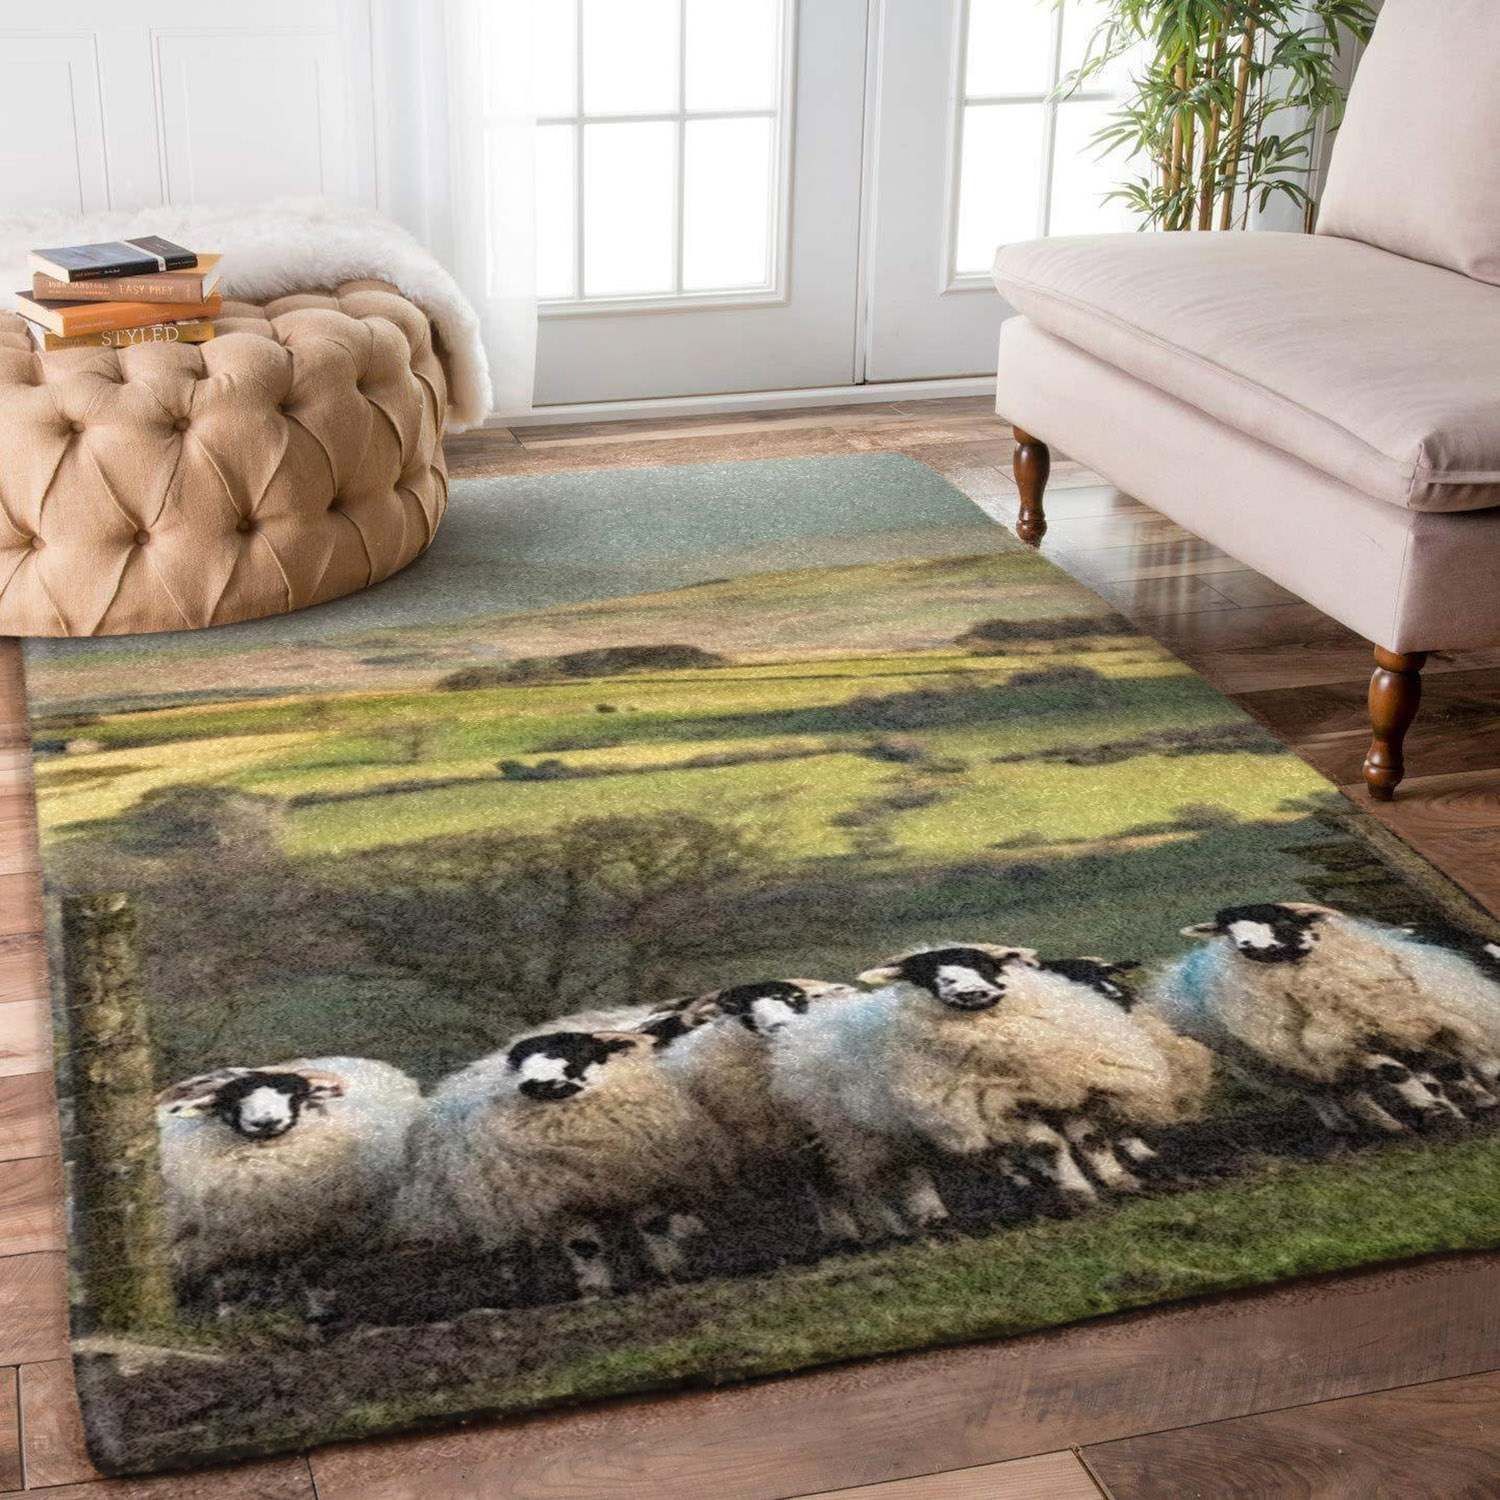 Rugs in Living Room and Bedroom - Sheep dv13144 rug carpet